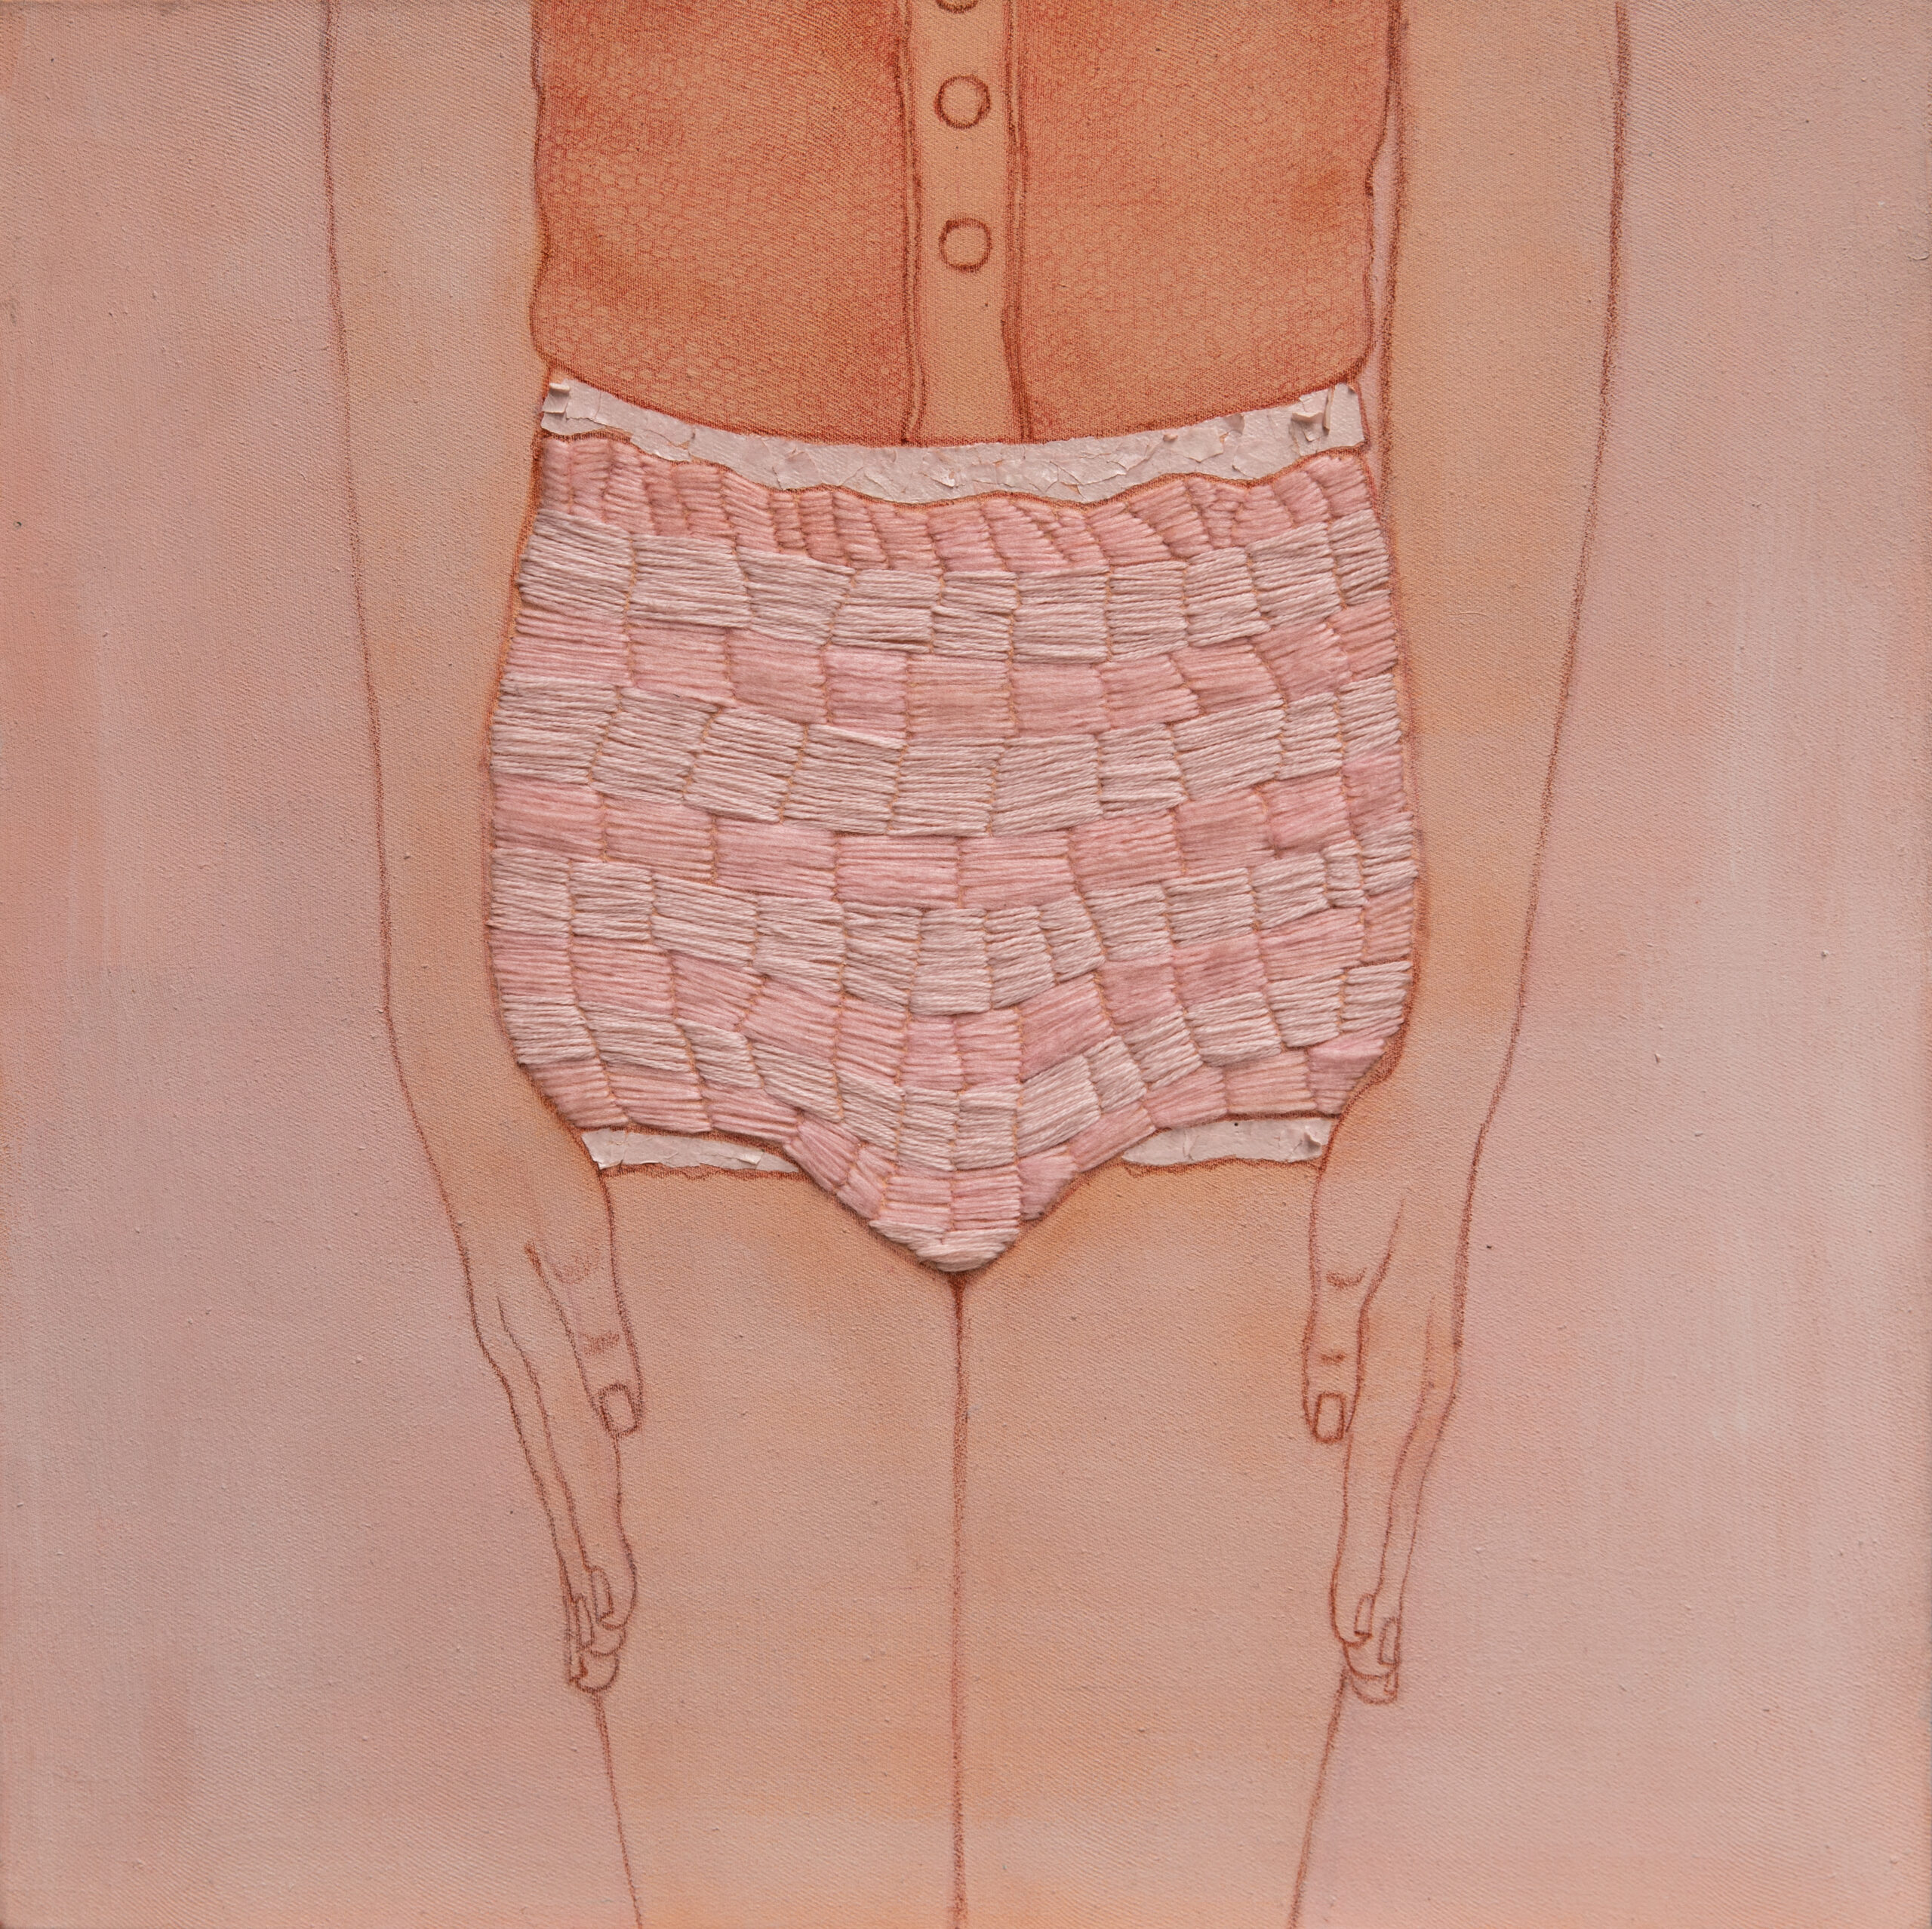 Soldatina,mixed media on canvas , 40x40cm, 2014.|